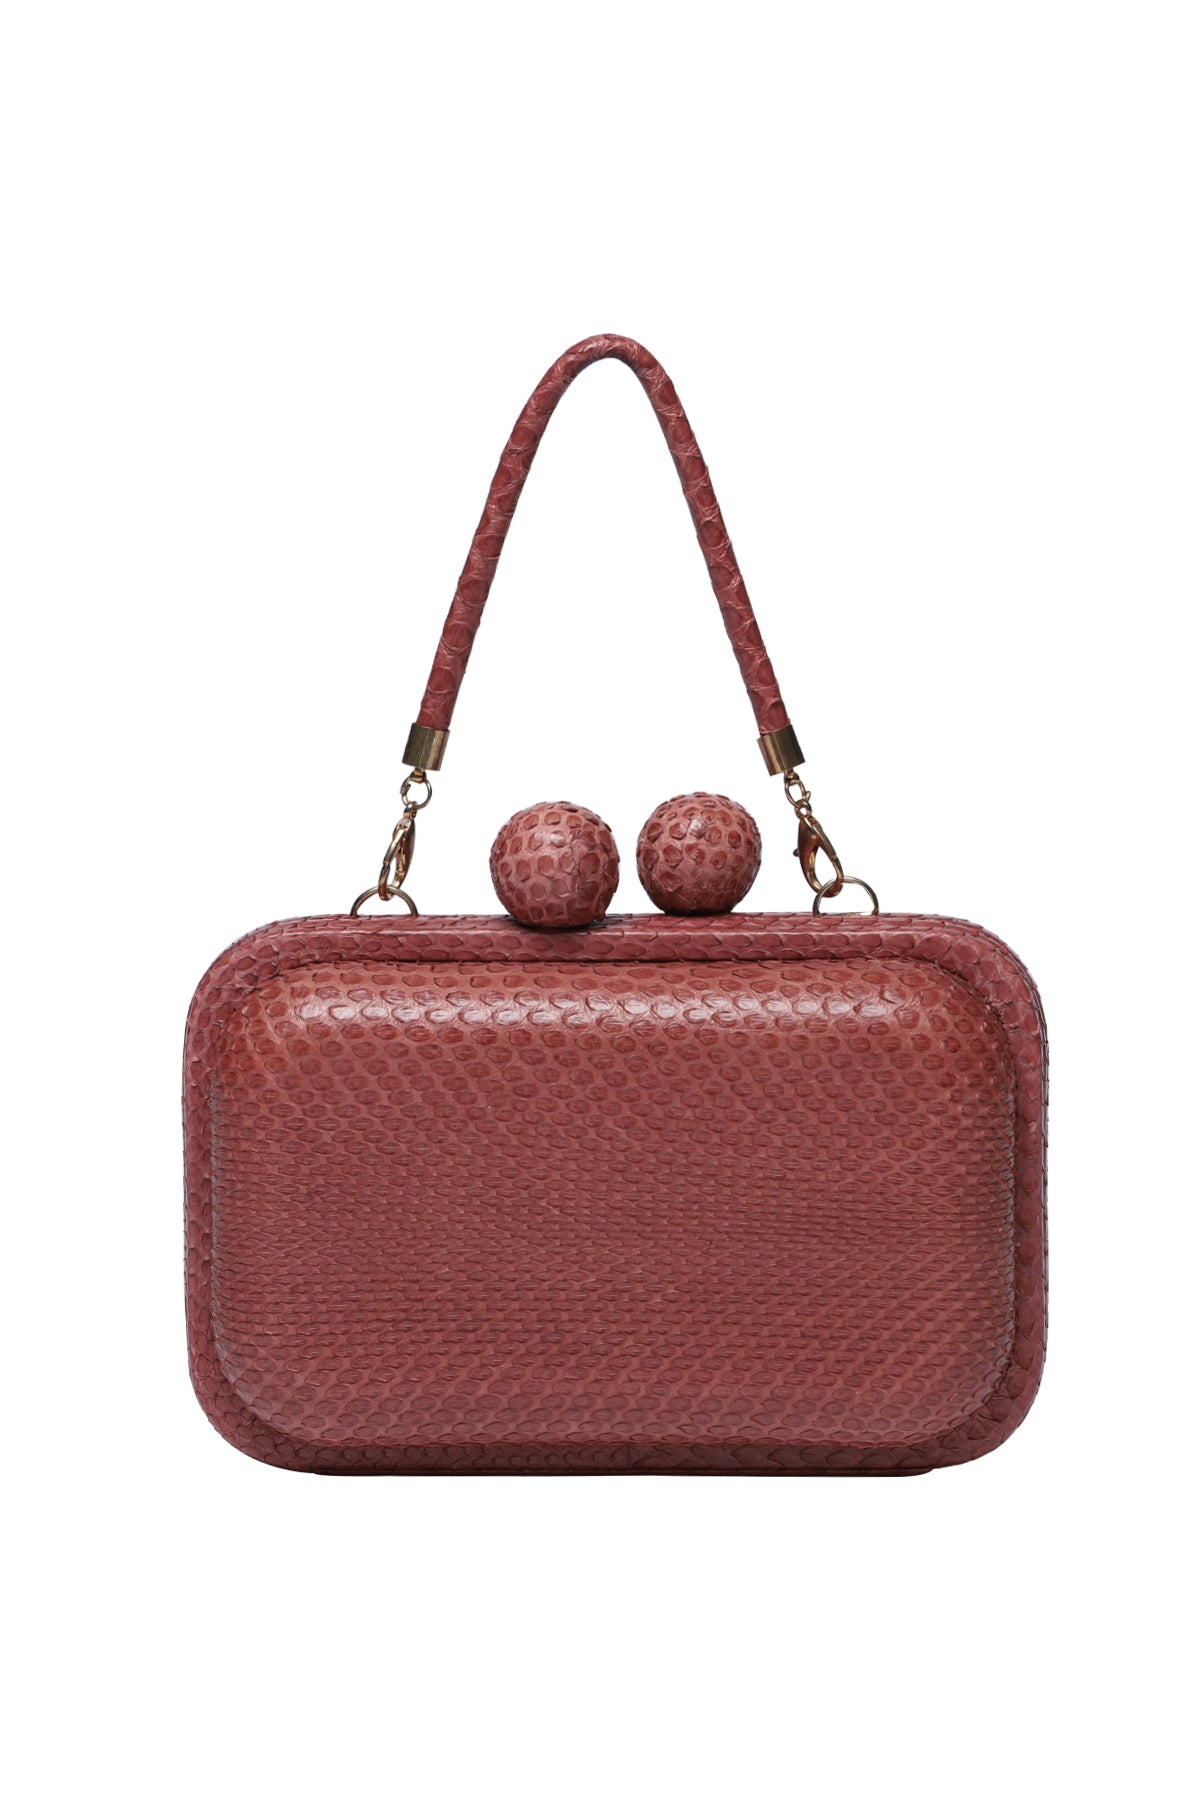 Red Python Leather Handbag